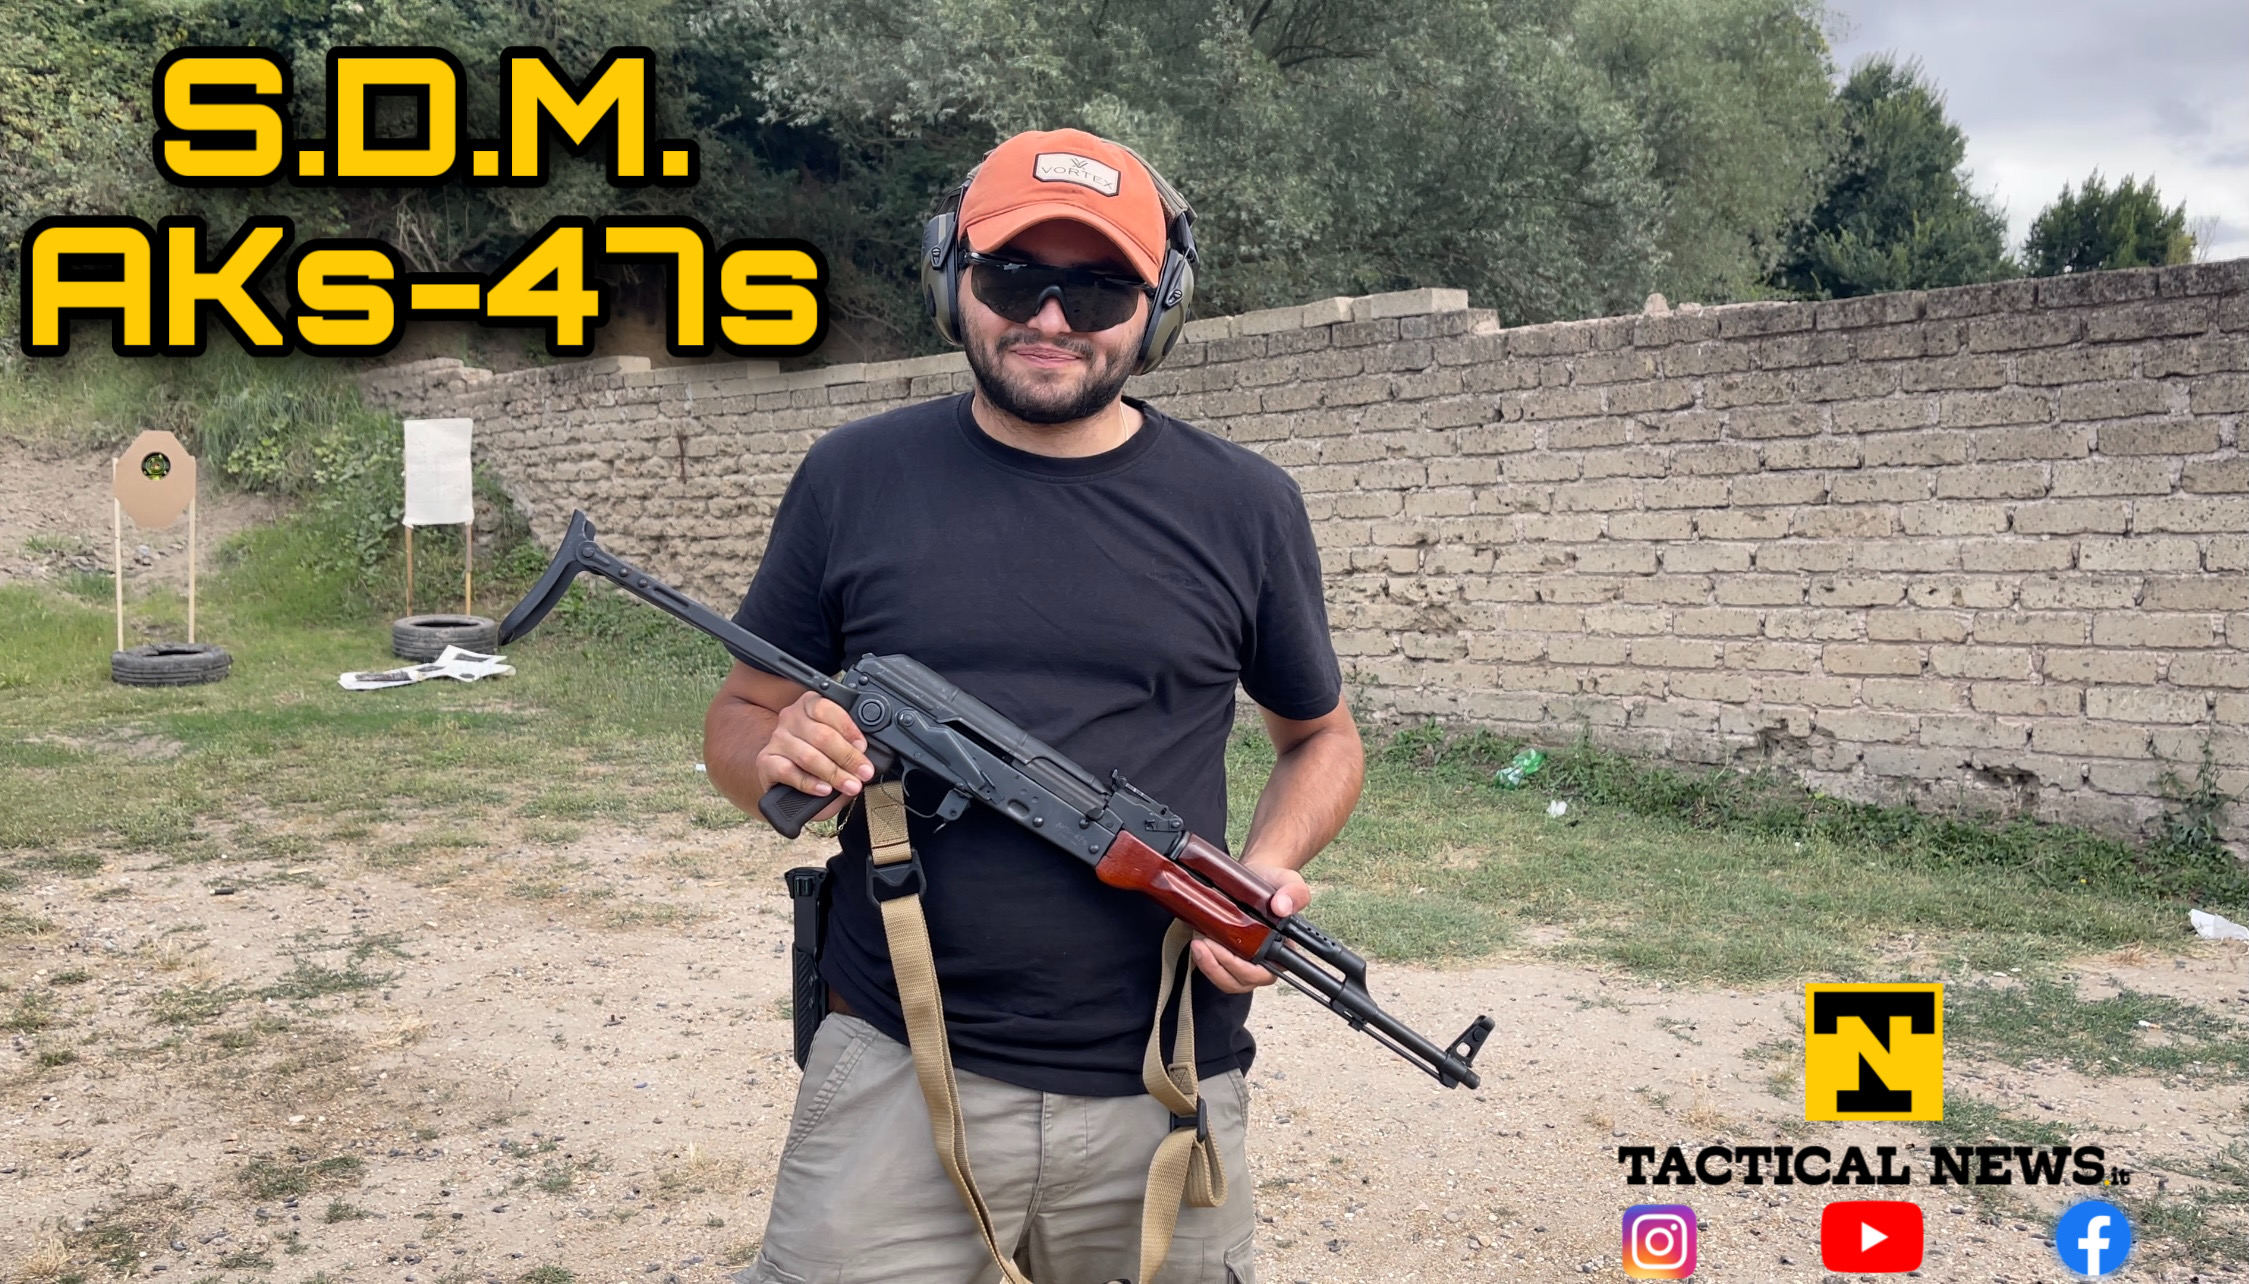 S.D.M. AK-47 - TACTICAL NEWS SDM AKs-47s